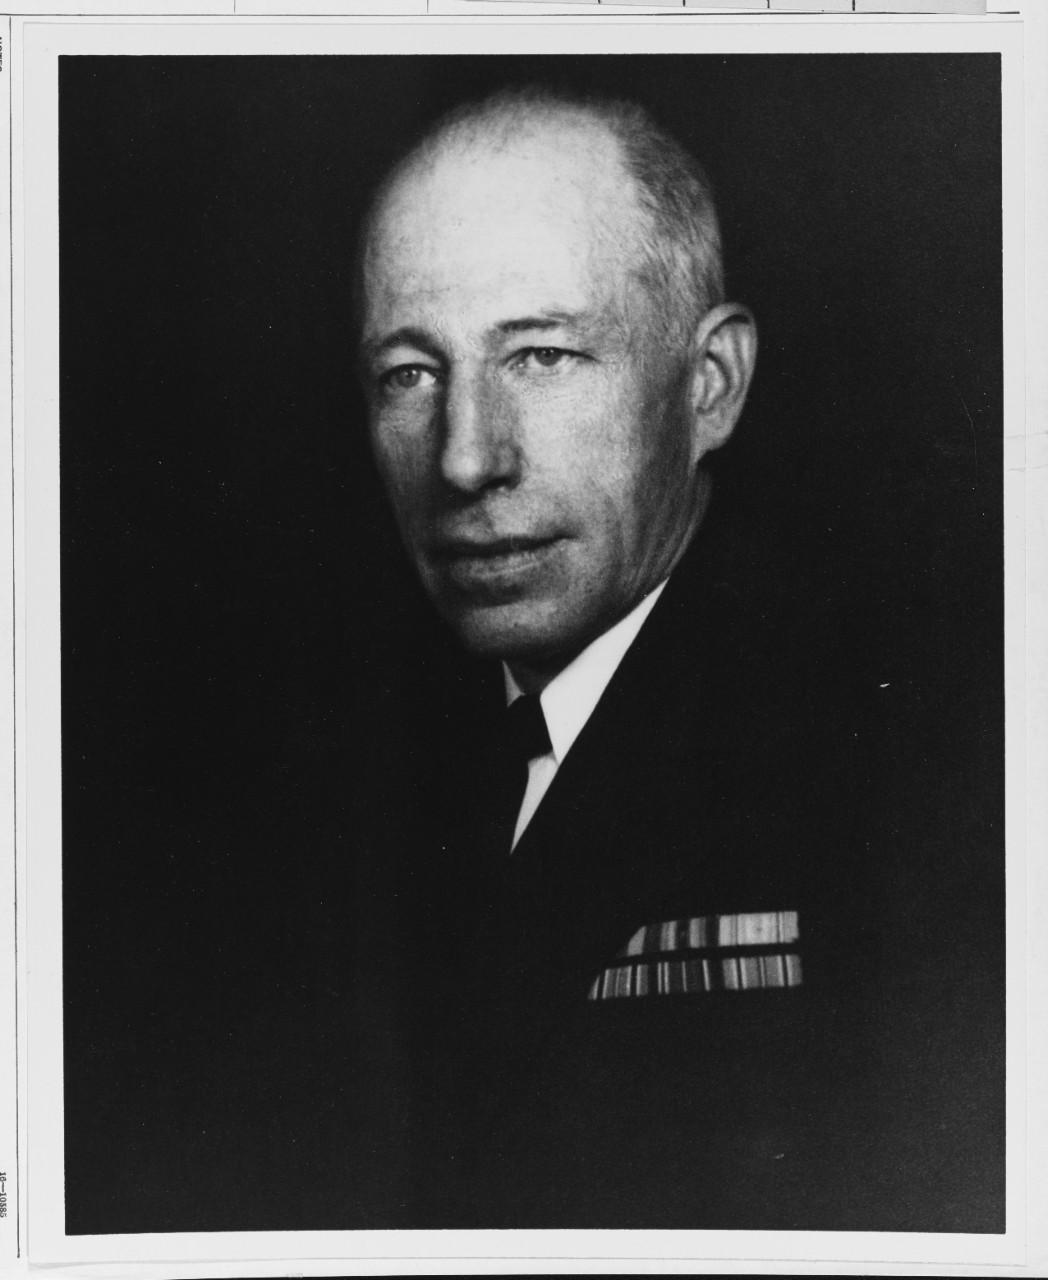 Vice Admiral Carleton H. Wright USN